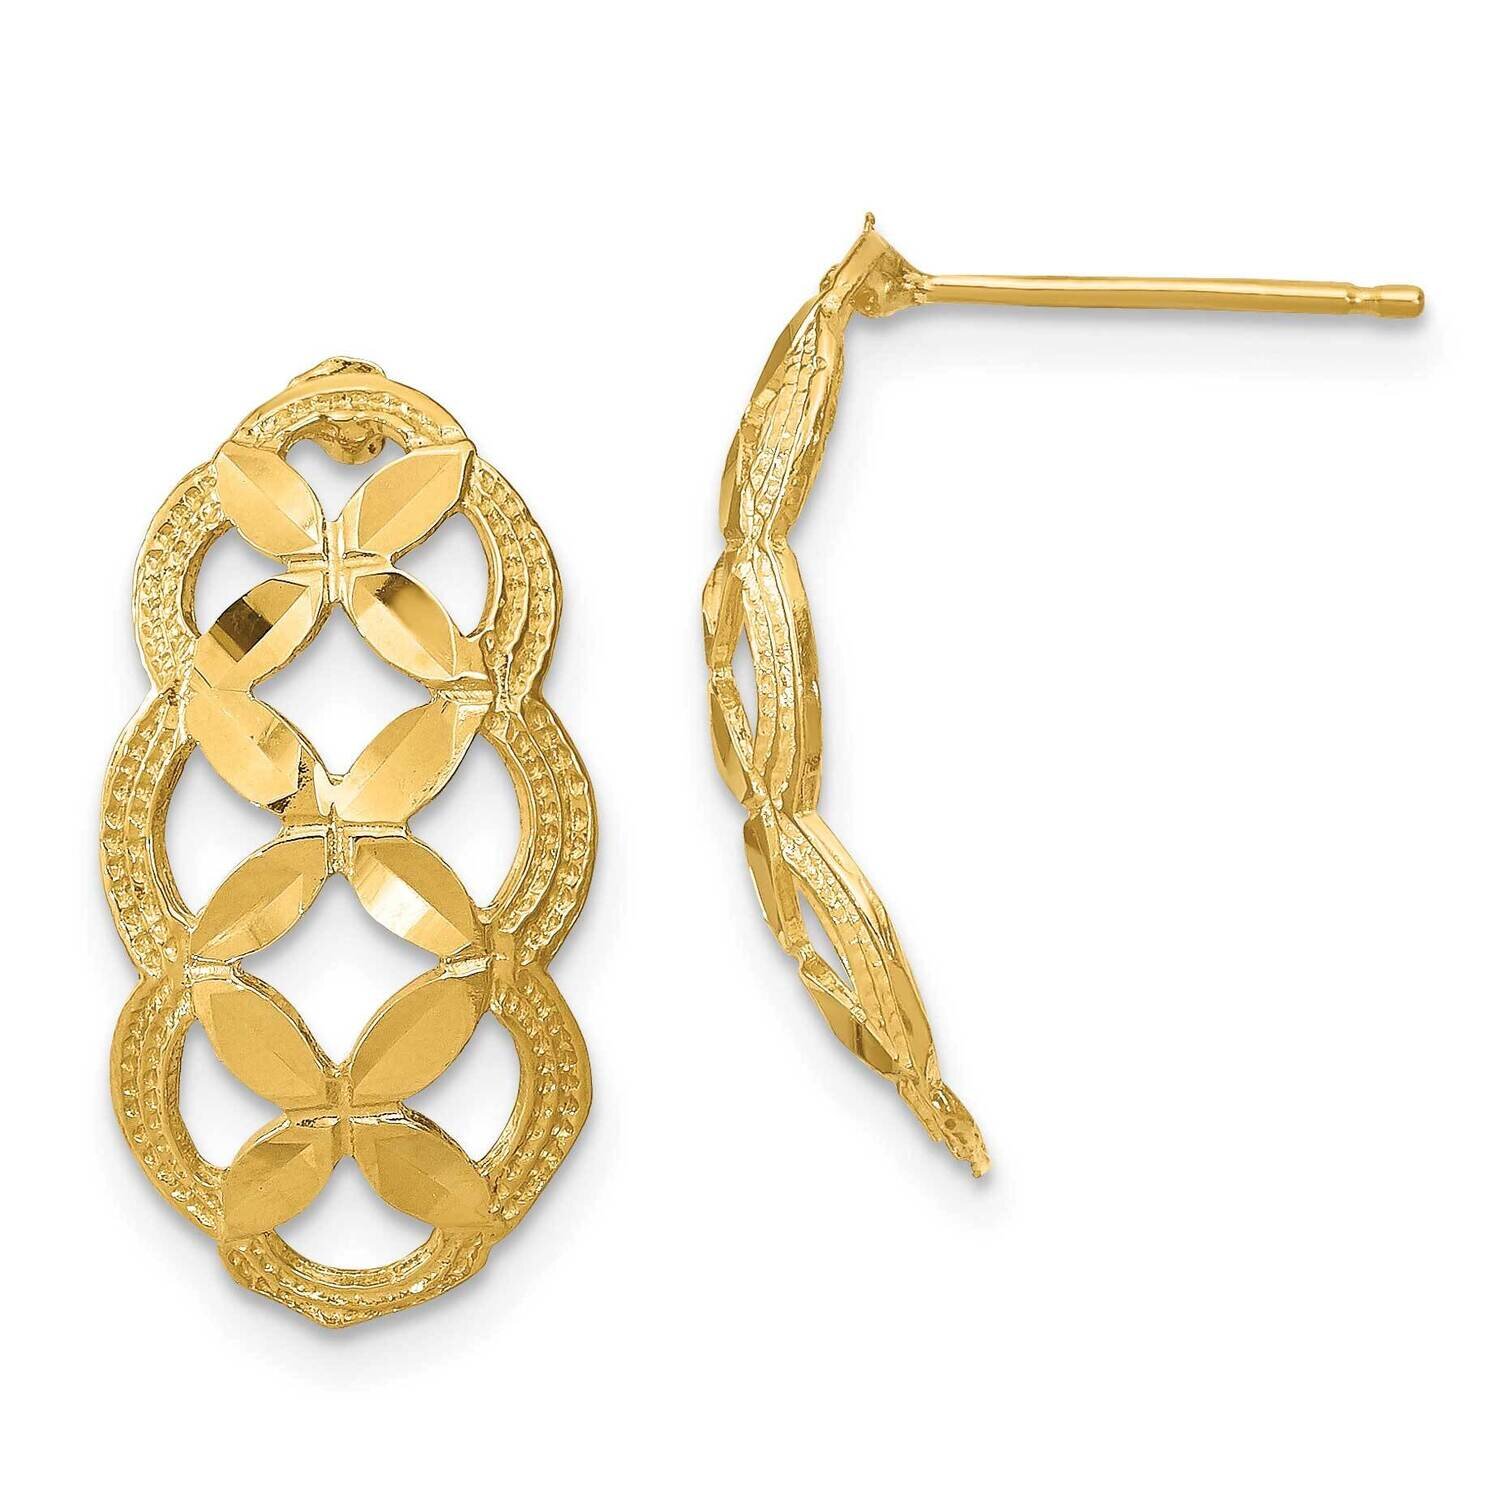 X Scalloped Designed Post Earrings 14k Gold Diamond-cut TE730